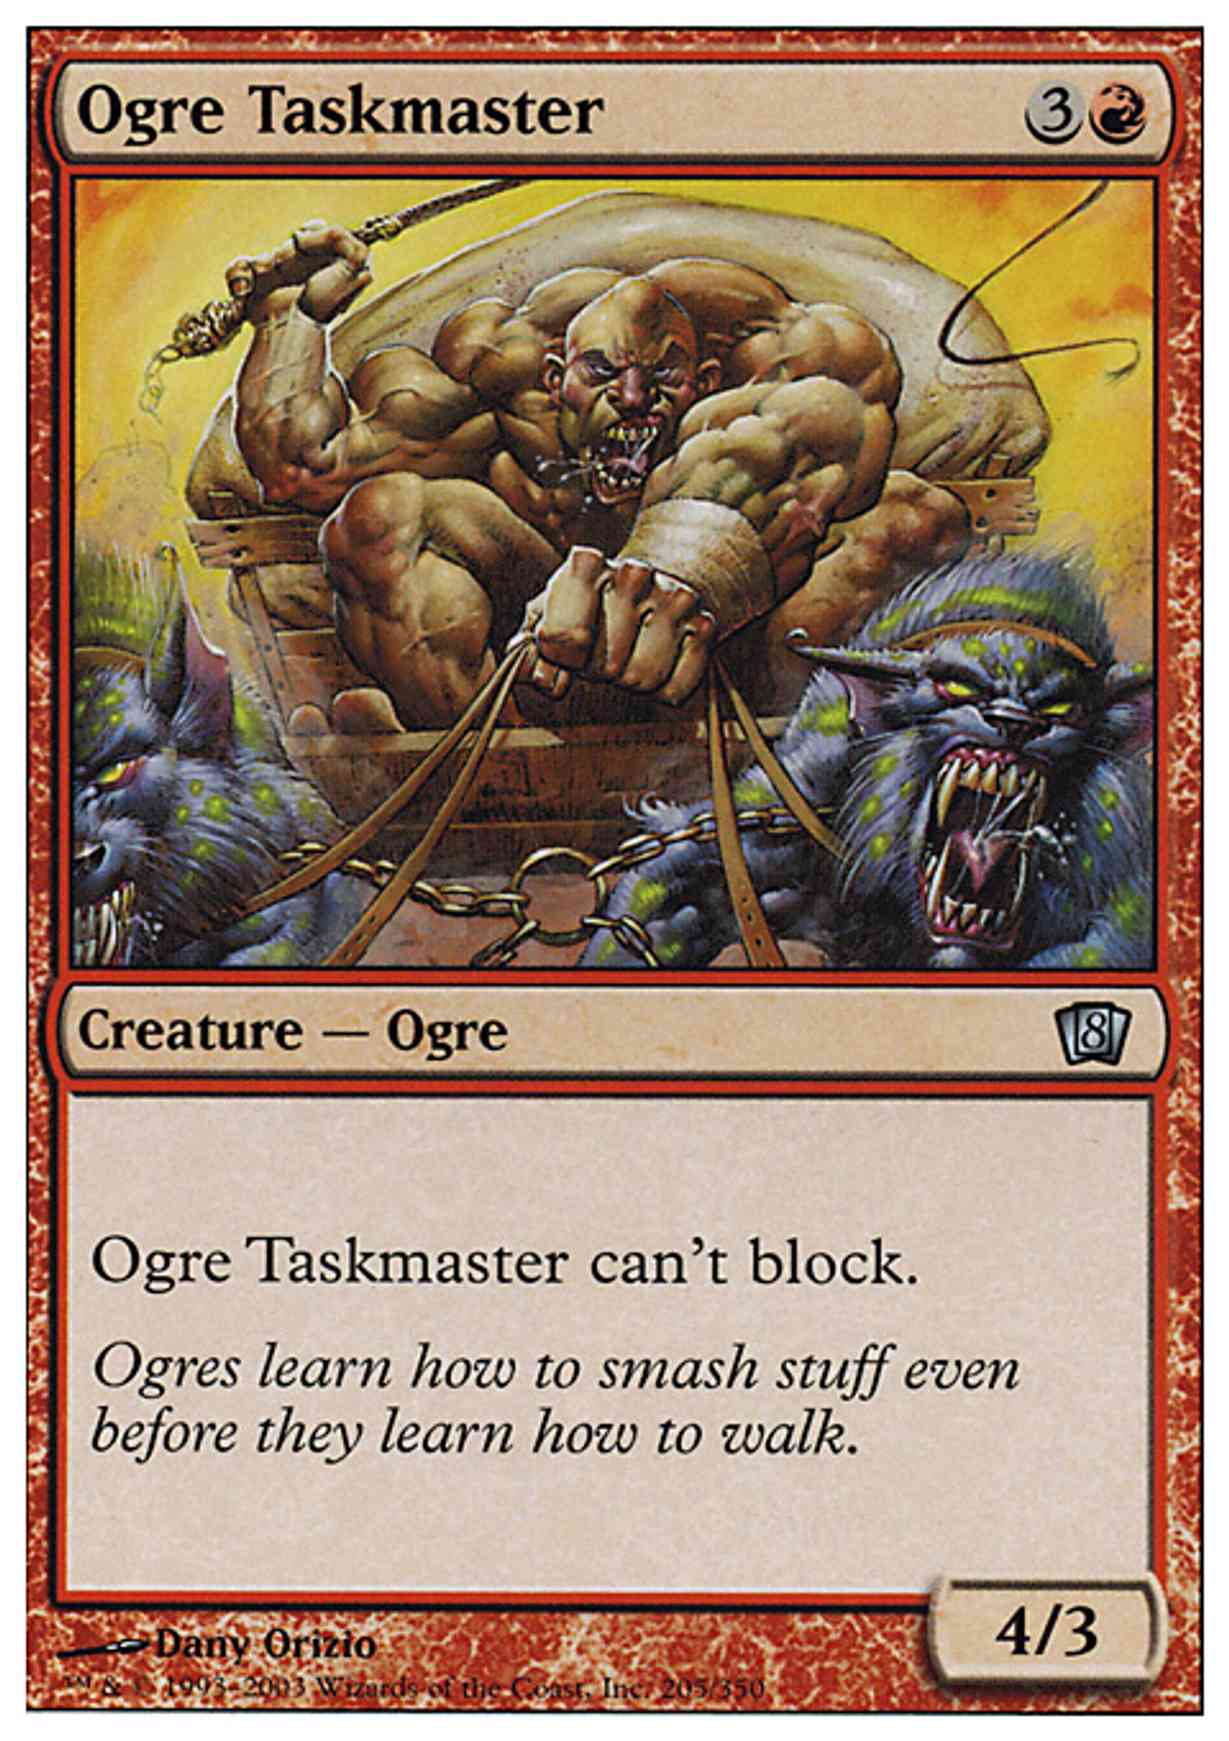 Ogre Taskmaster magic card front